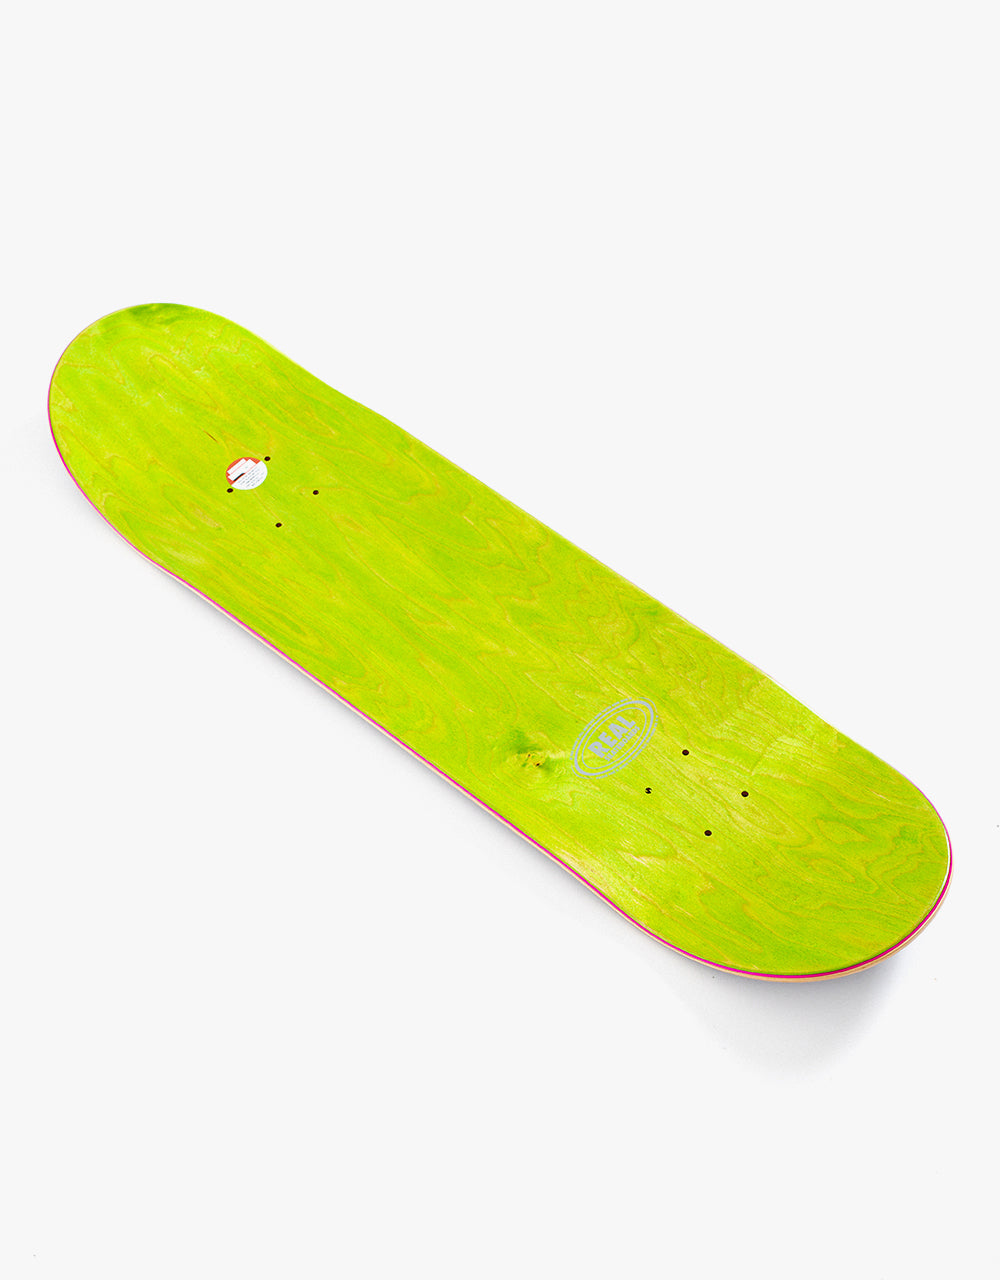 Real Bold Redux Skateboard Deck - 8.38"